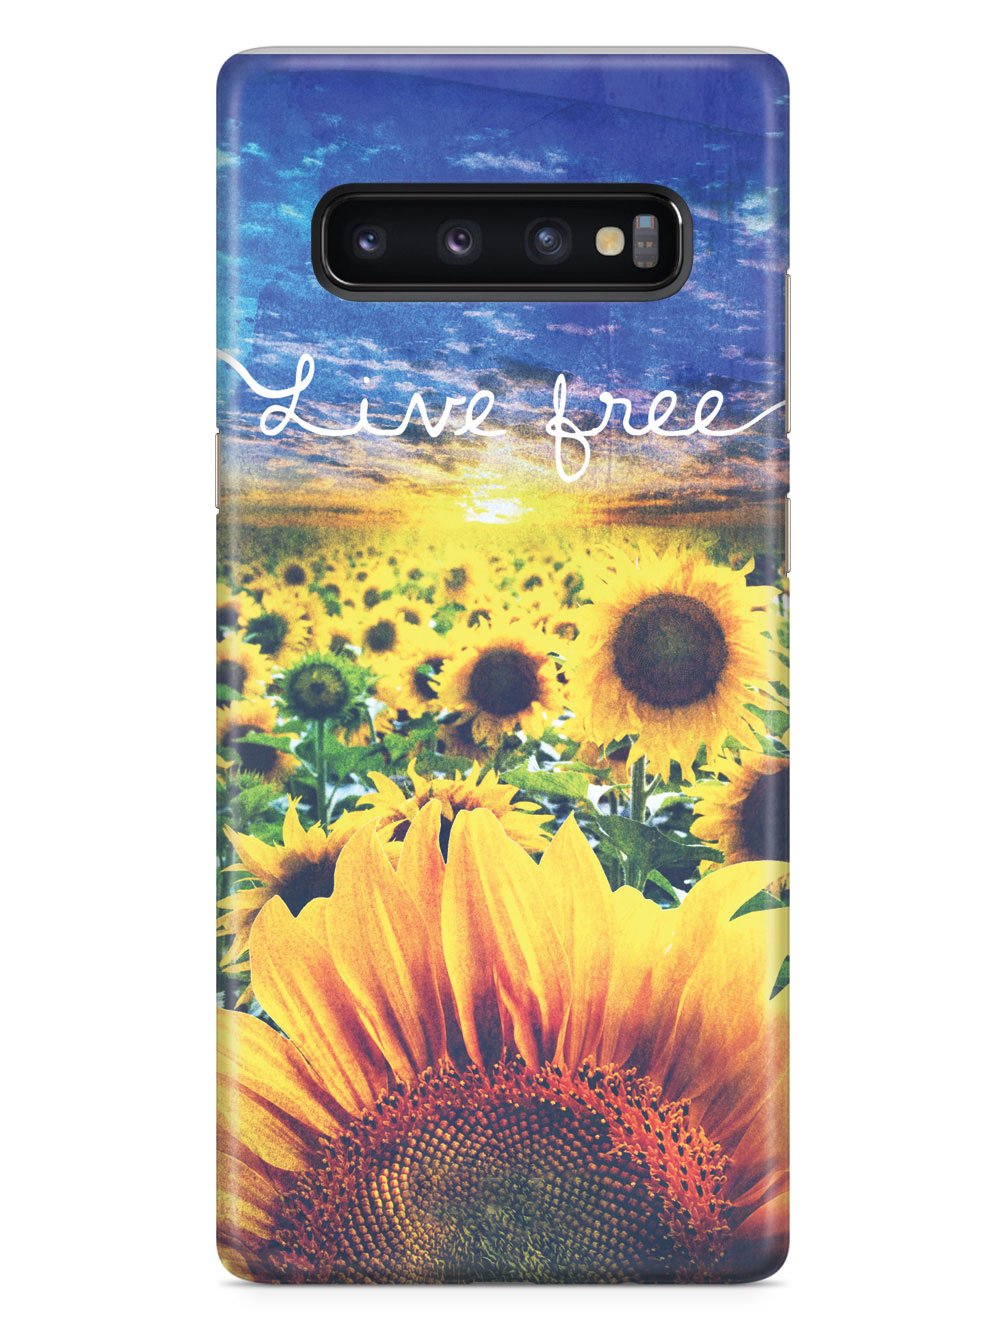 Live Free - Sunflower Field Case